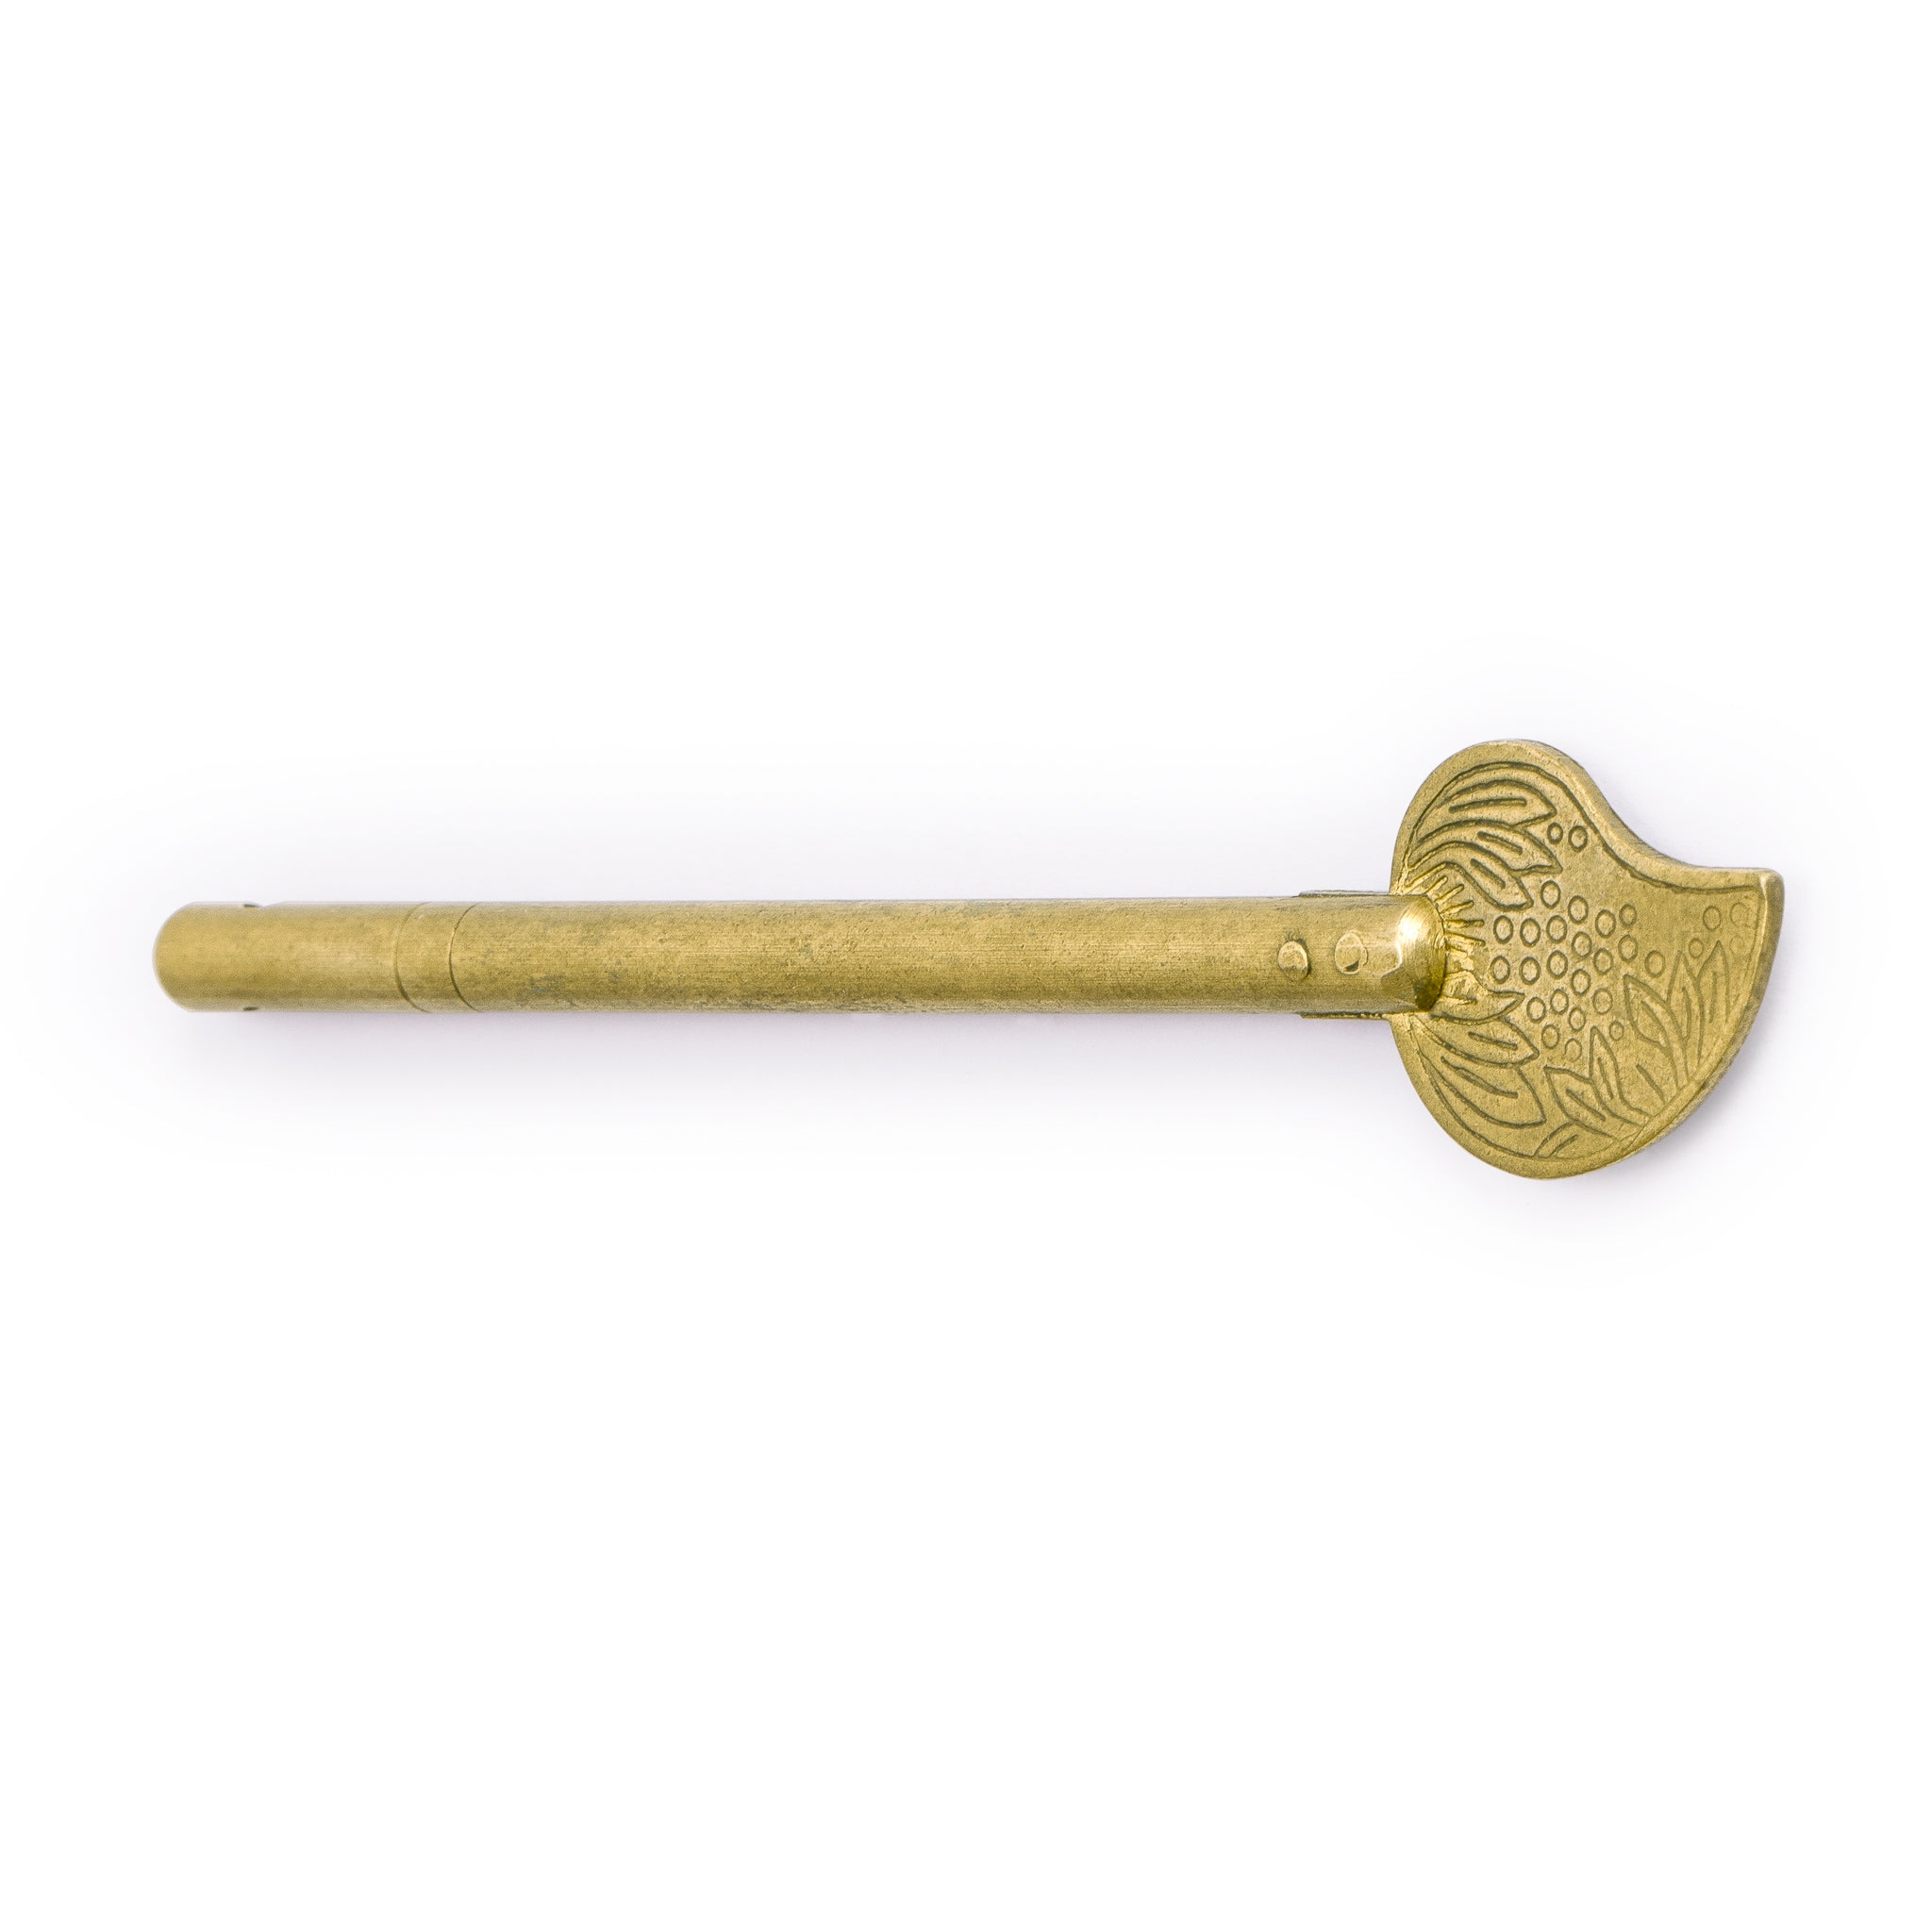 Bird Tail Key Pins 4.3" - Set of 2-Chinese Brass Hardware